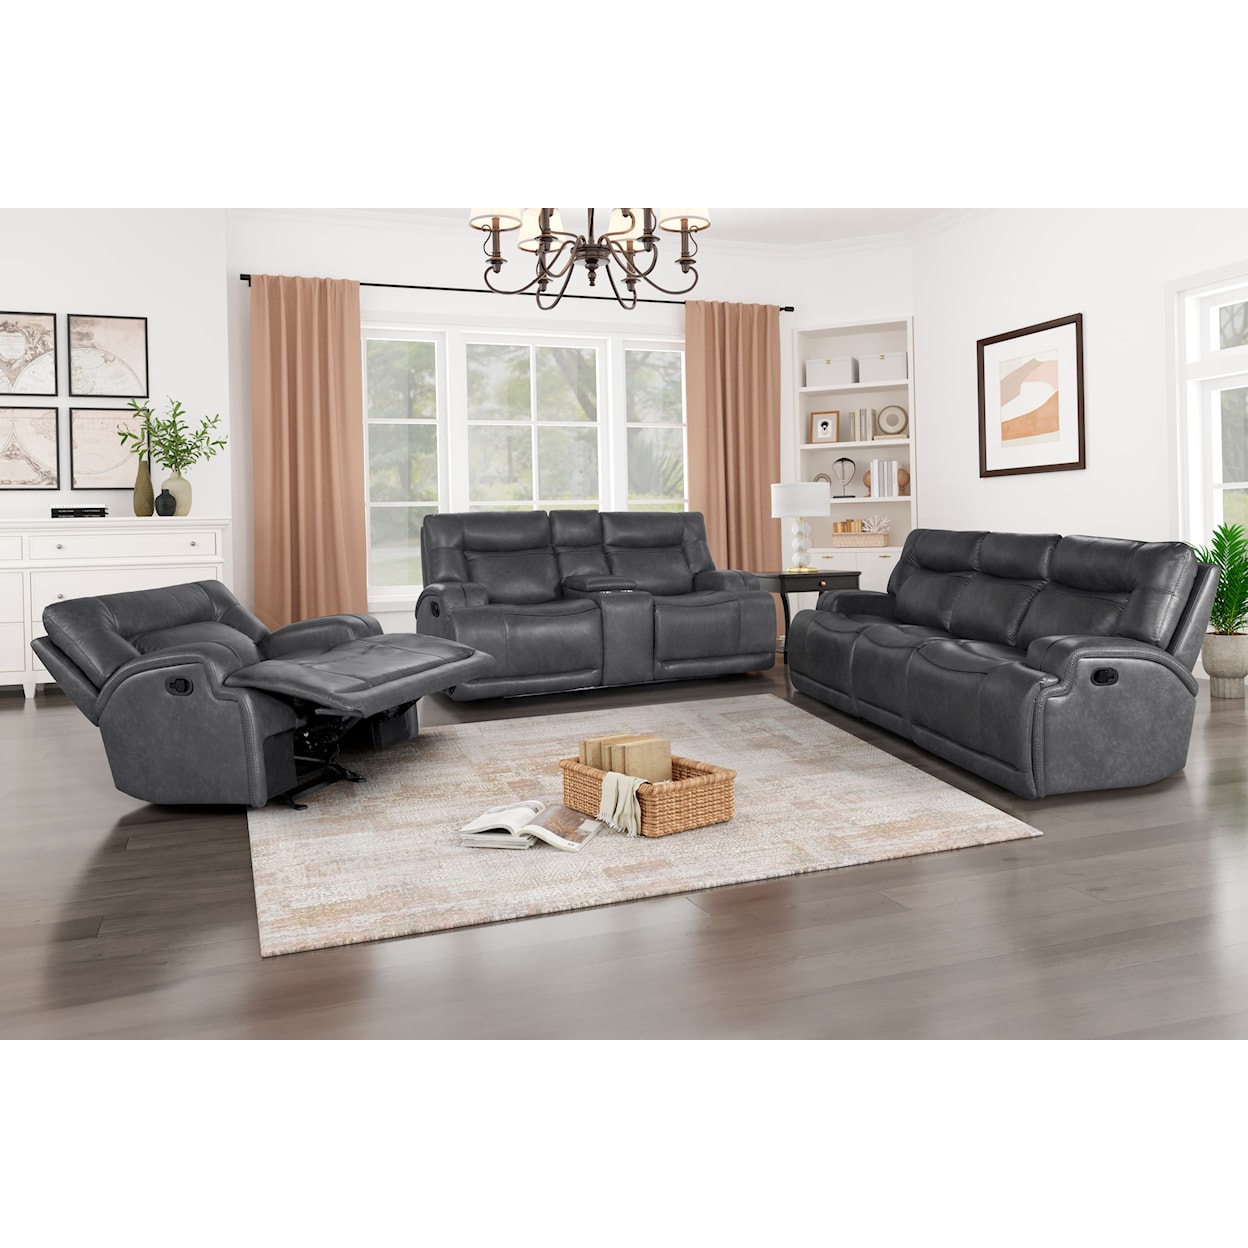 New Classic Furniture Titan Sofa